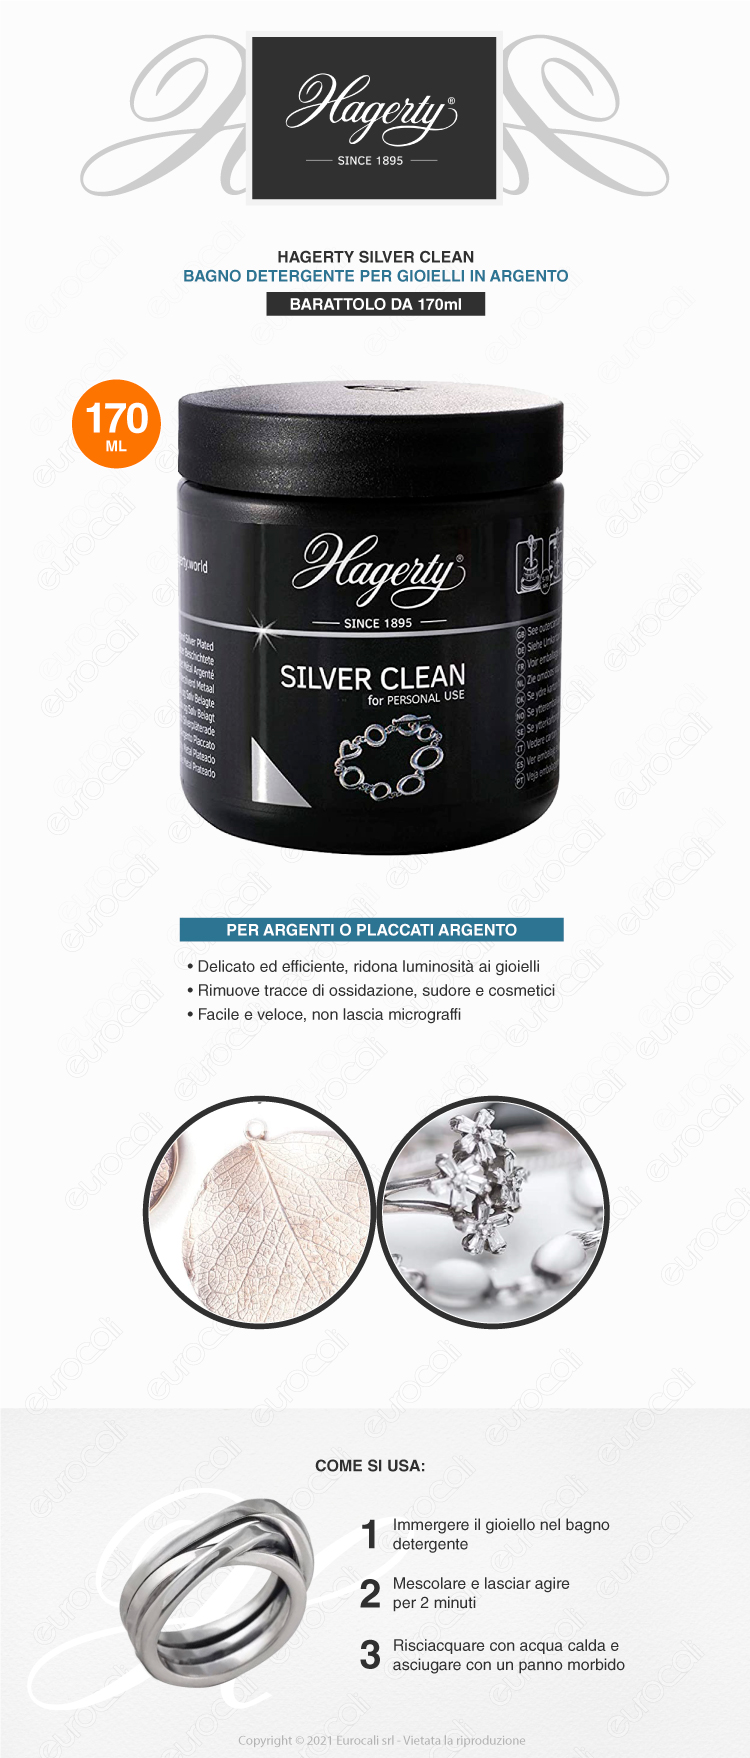 hagerty silver clean pulitore gioielli argento bagno detergente immersione 170ml